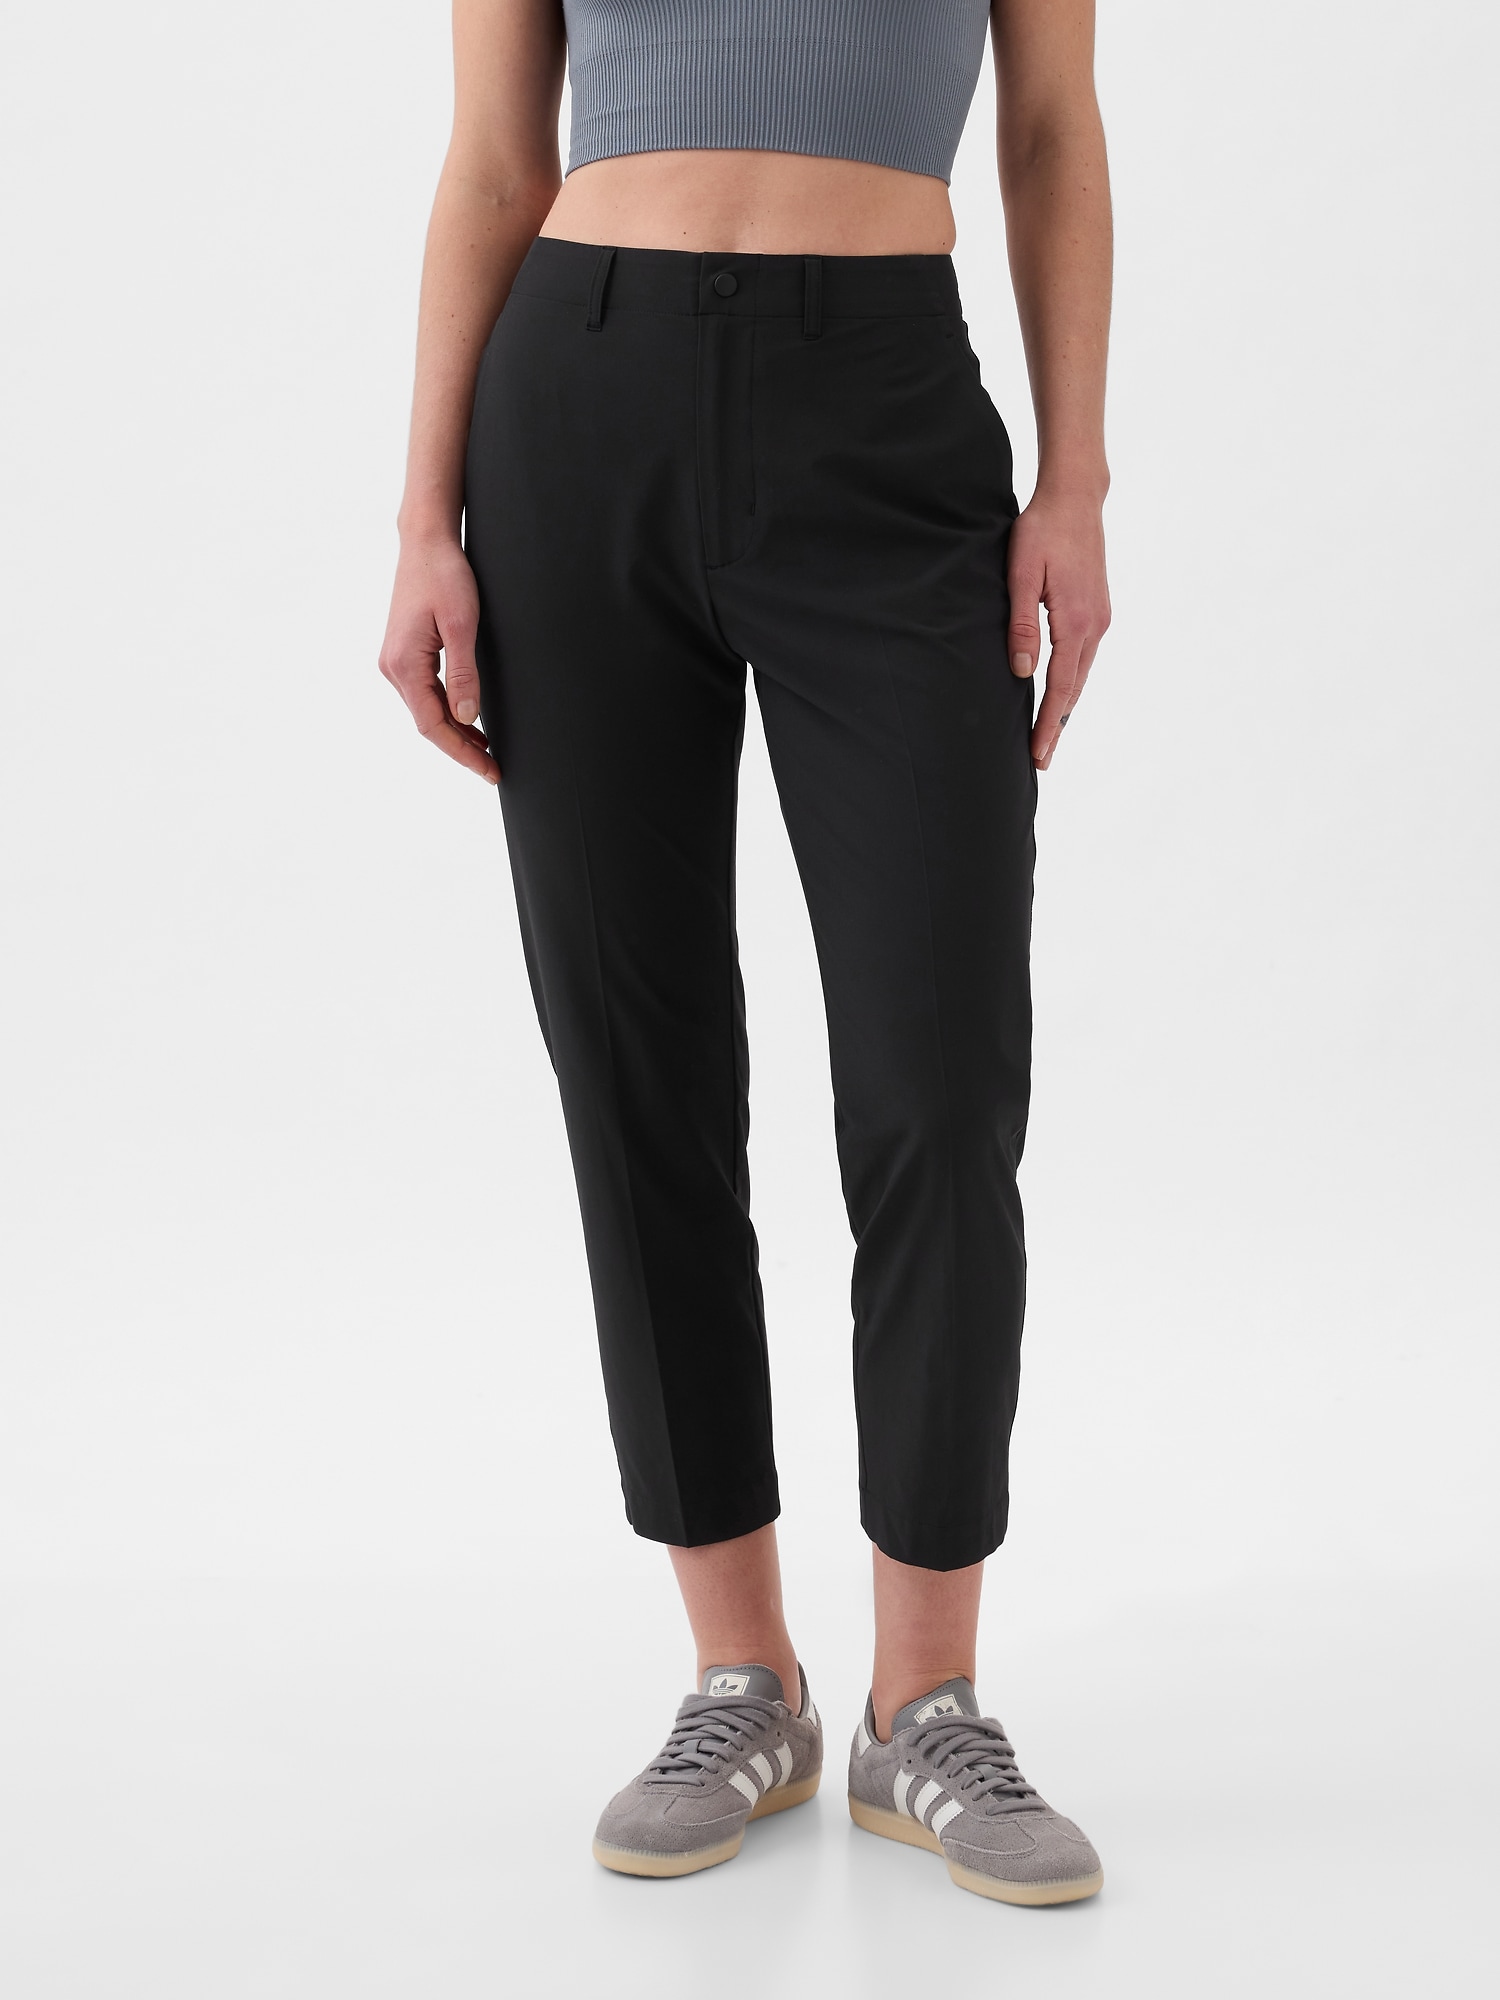 Superfit Energy Pants® - High Waisted - Petite Length - Black